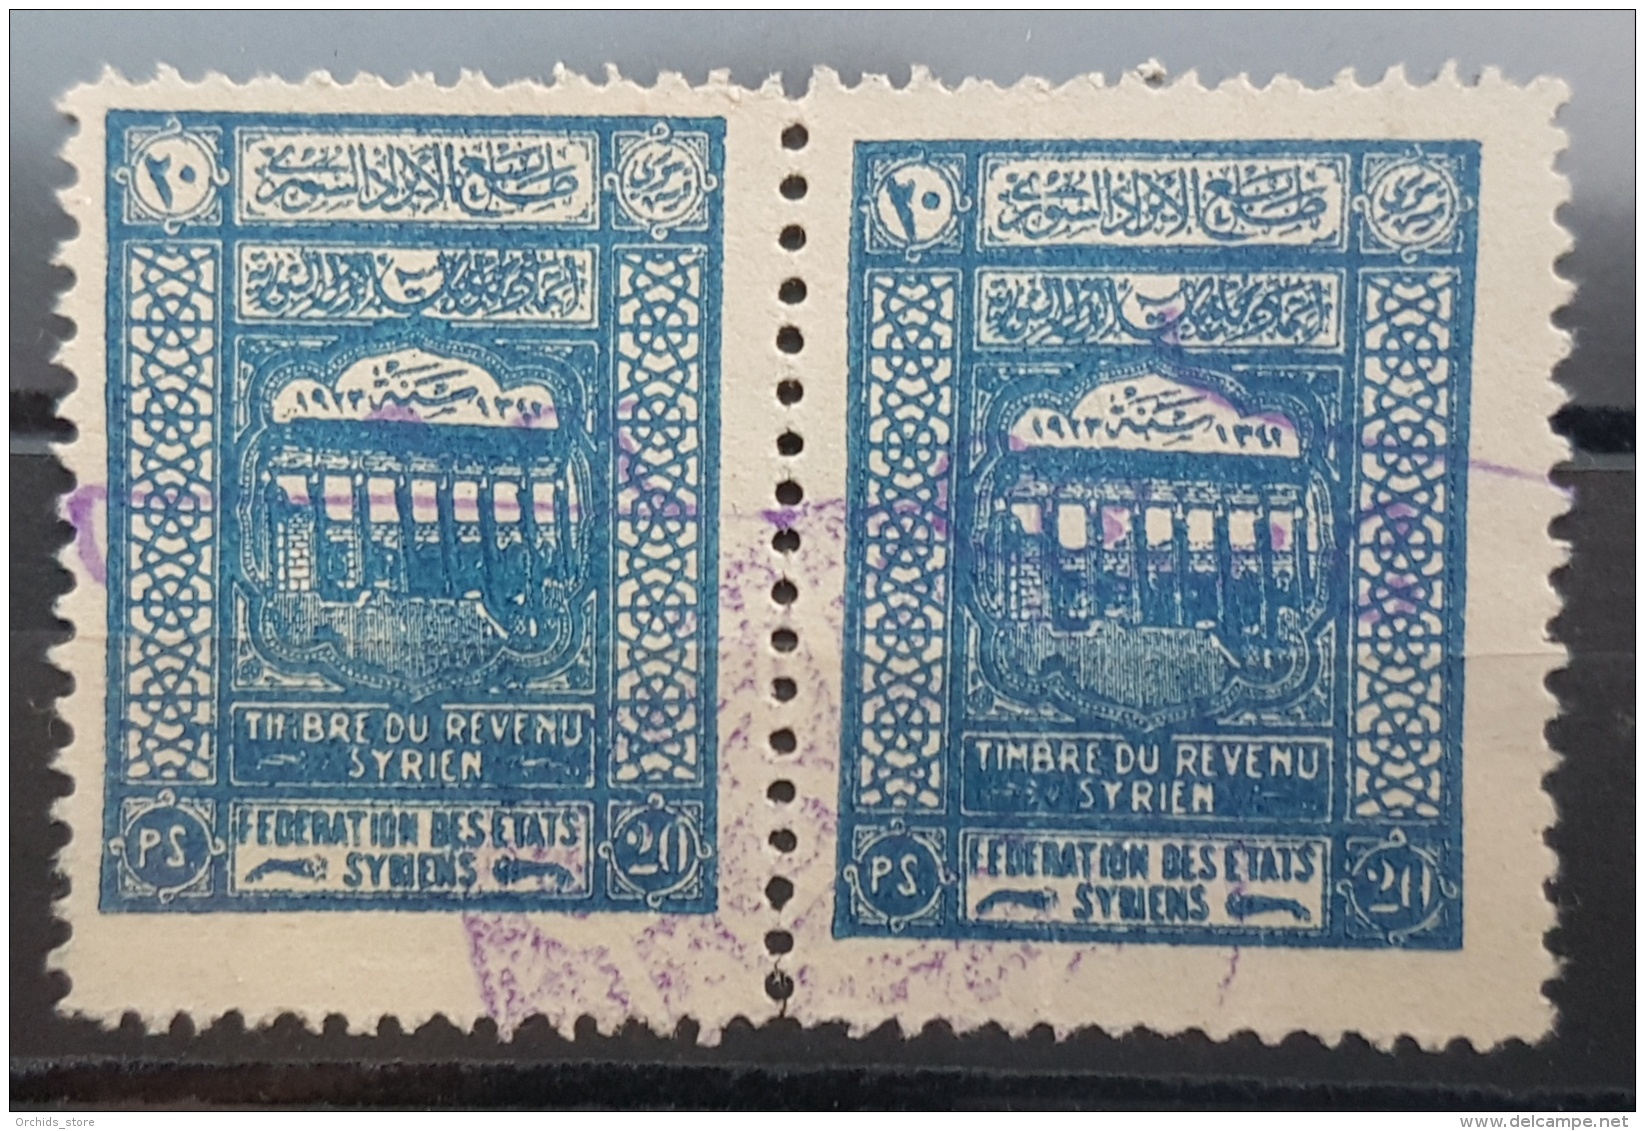 BB2 #4 - Syria 1923 General Revenue Stamp 20p Ultramarine - Pair -FEDERATION DES ETATS SYRIENS - Syria